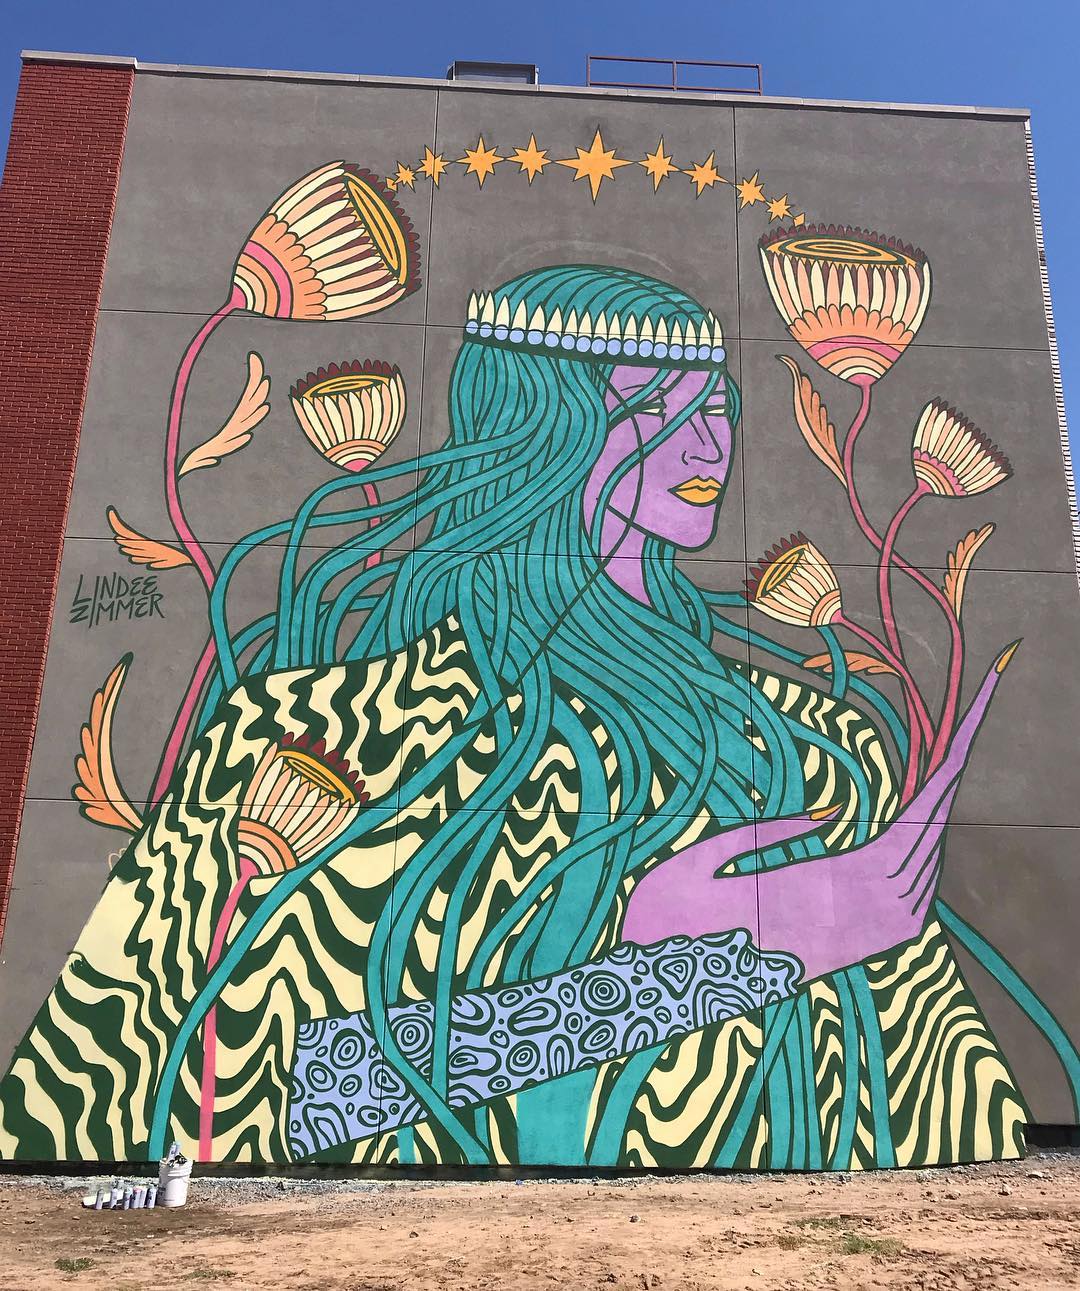 mural in Denver by artist Lindee Zimmer.